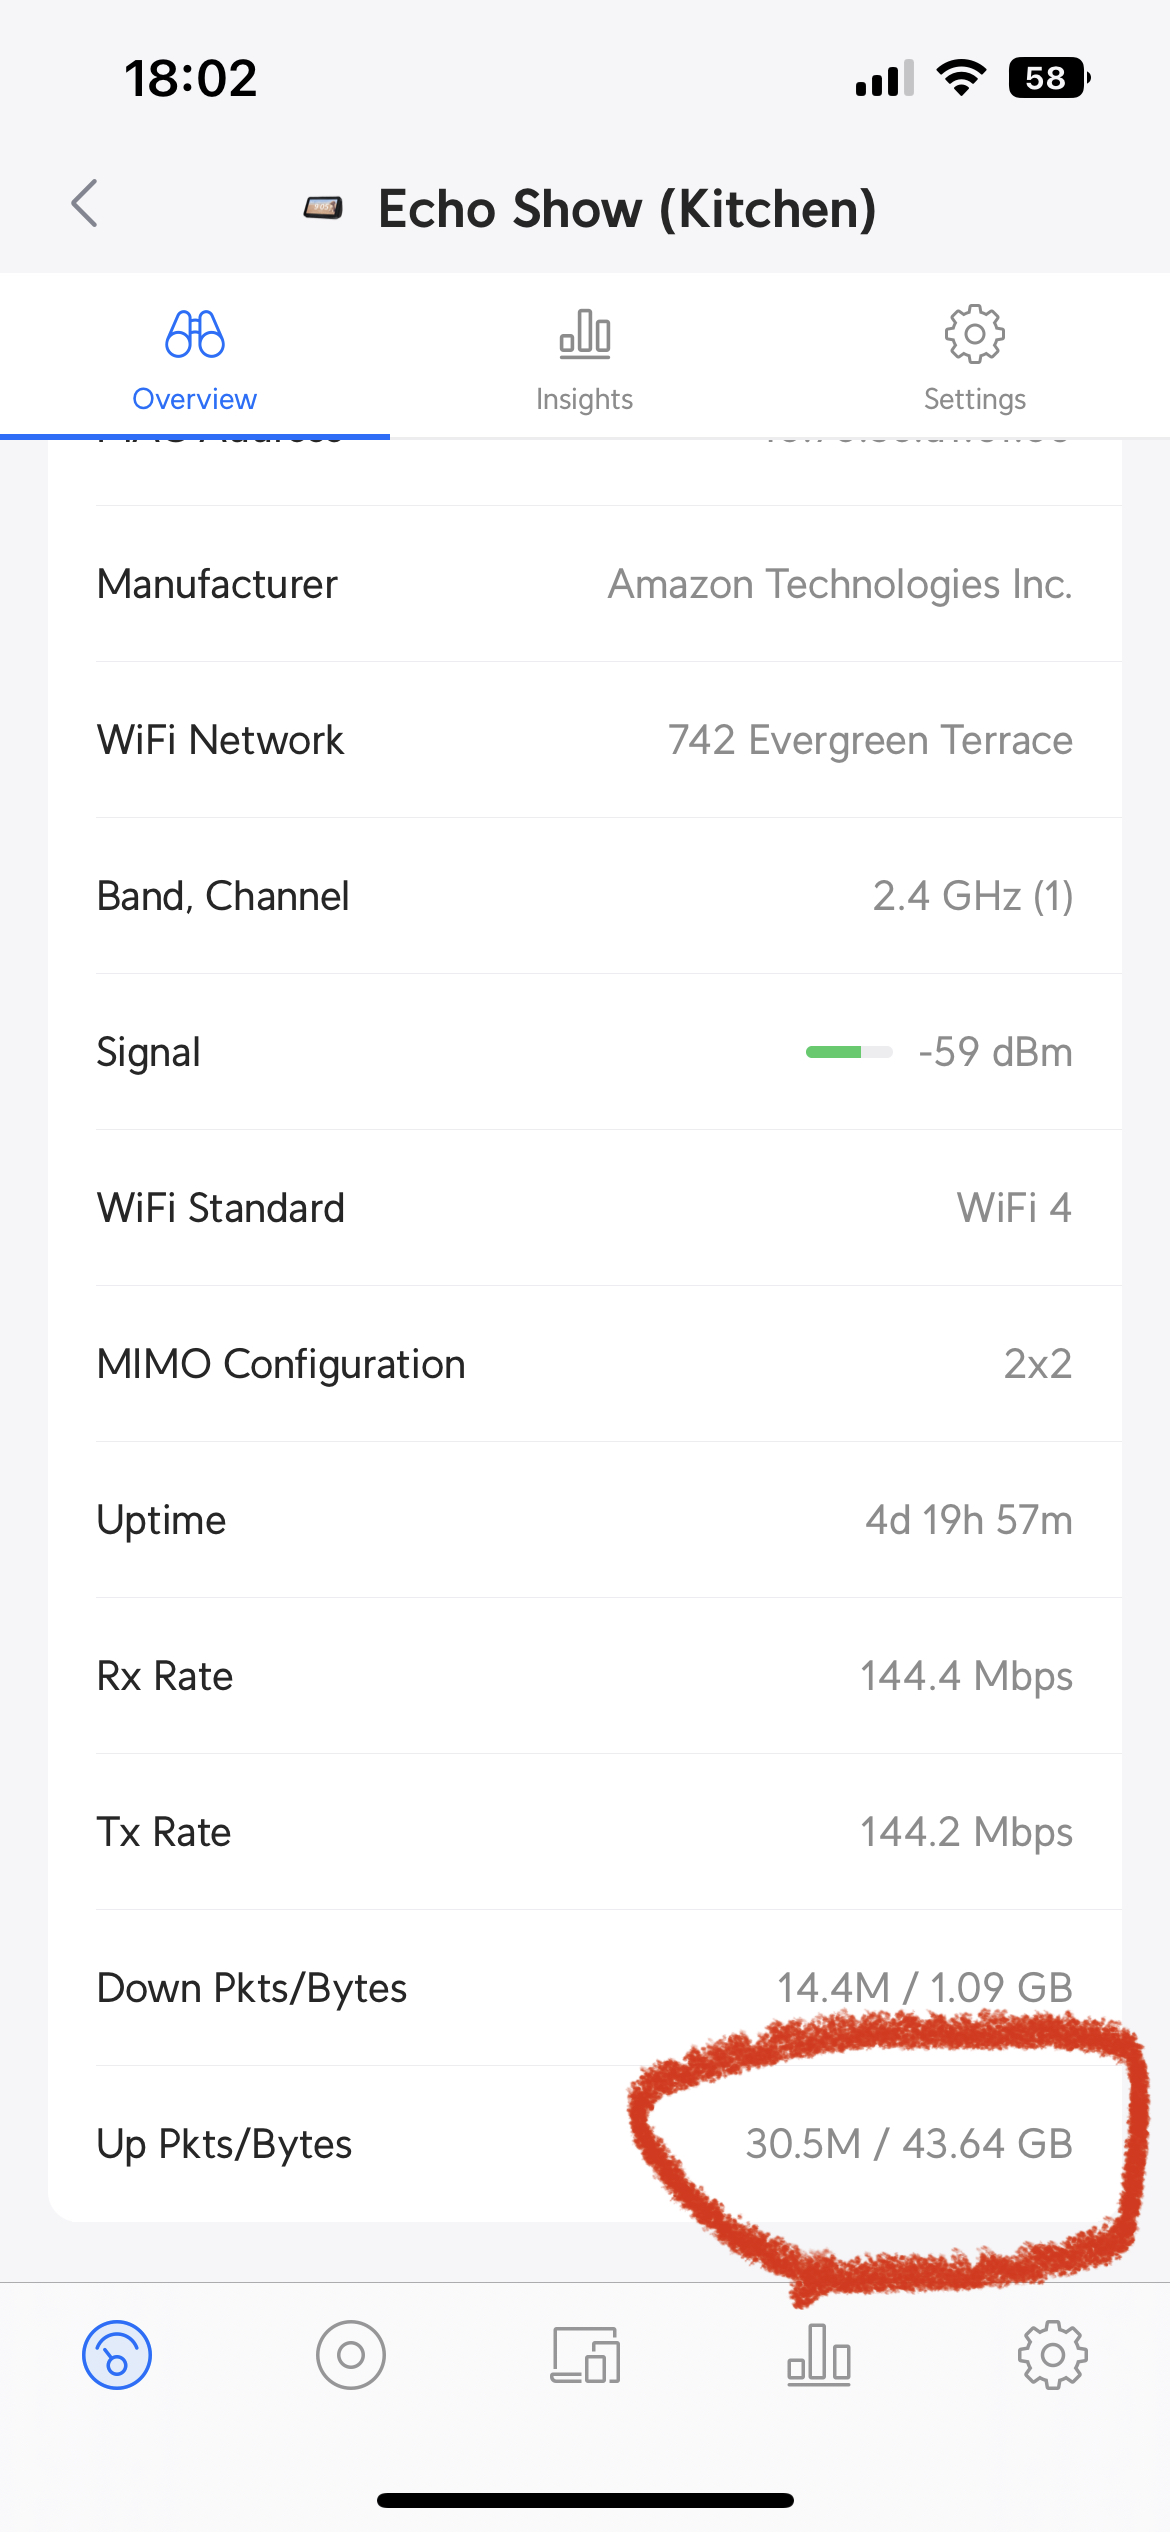 Echo Show bandwidth usage